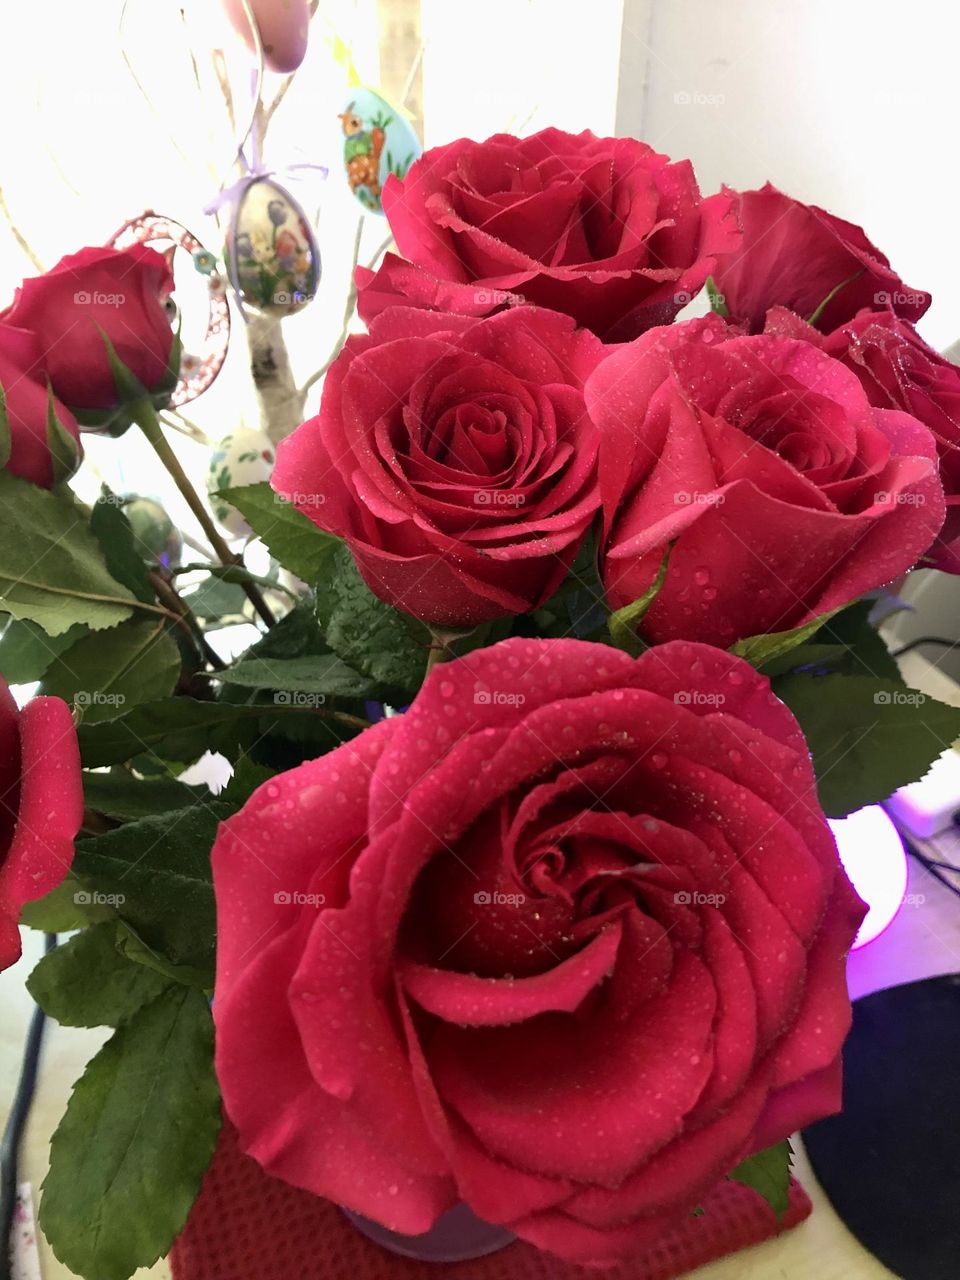 Blooming Roses in the vase 